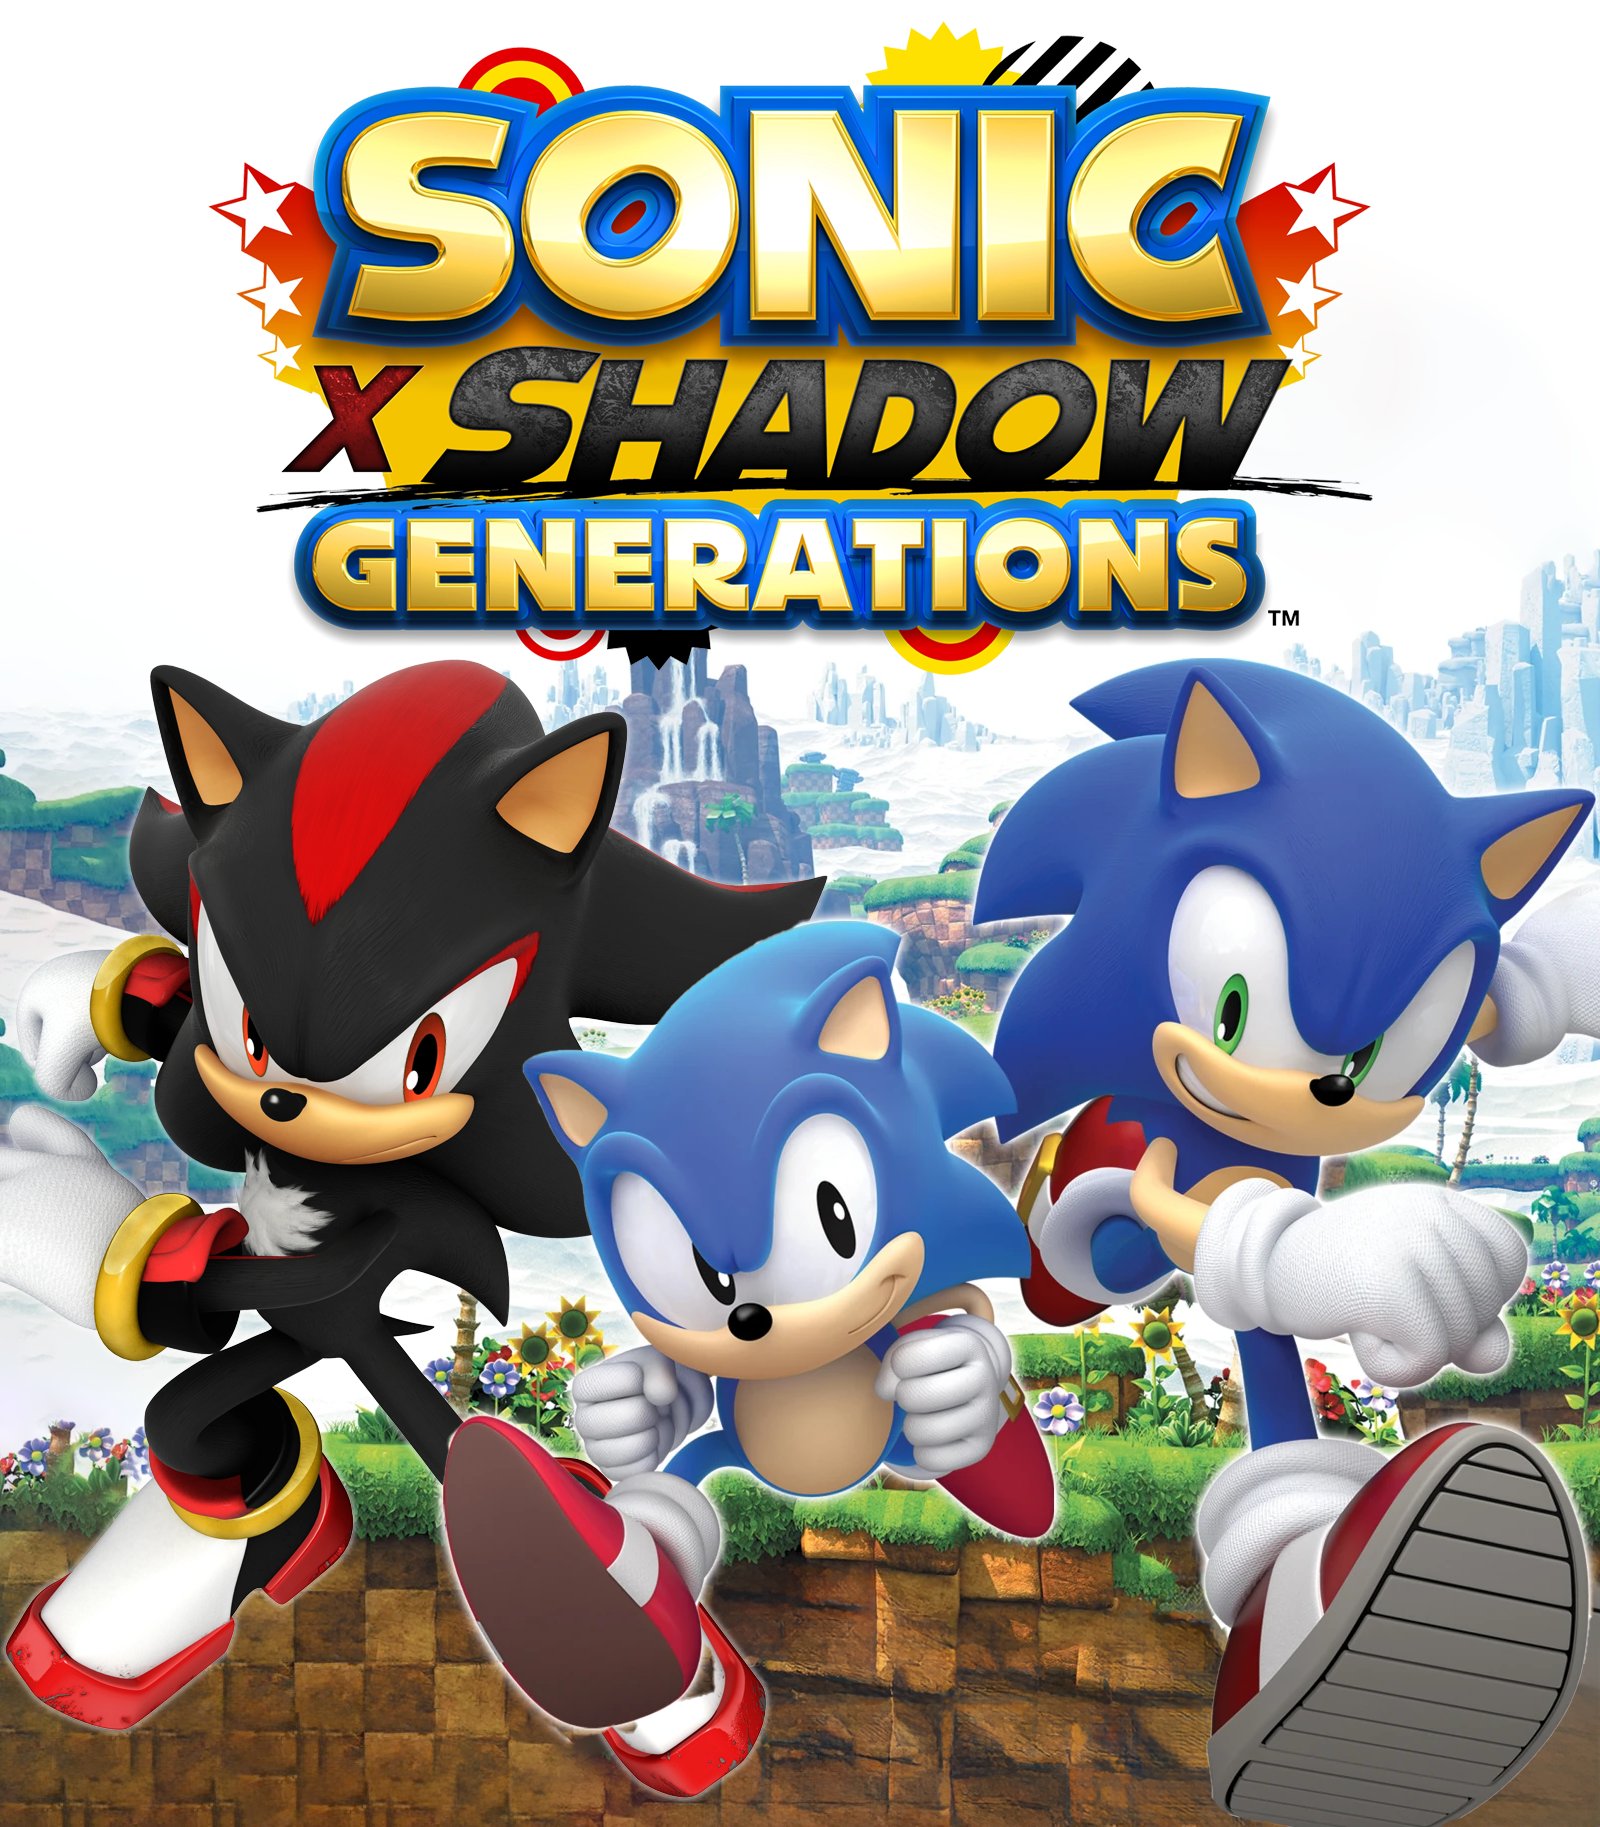 Sonic Generations, Sonic x Shadow GEnerations